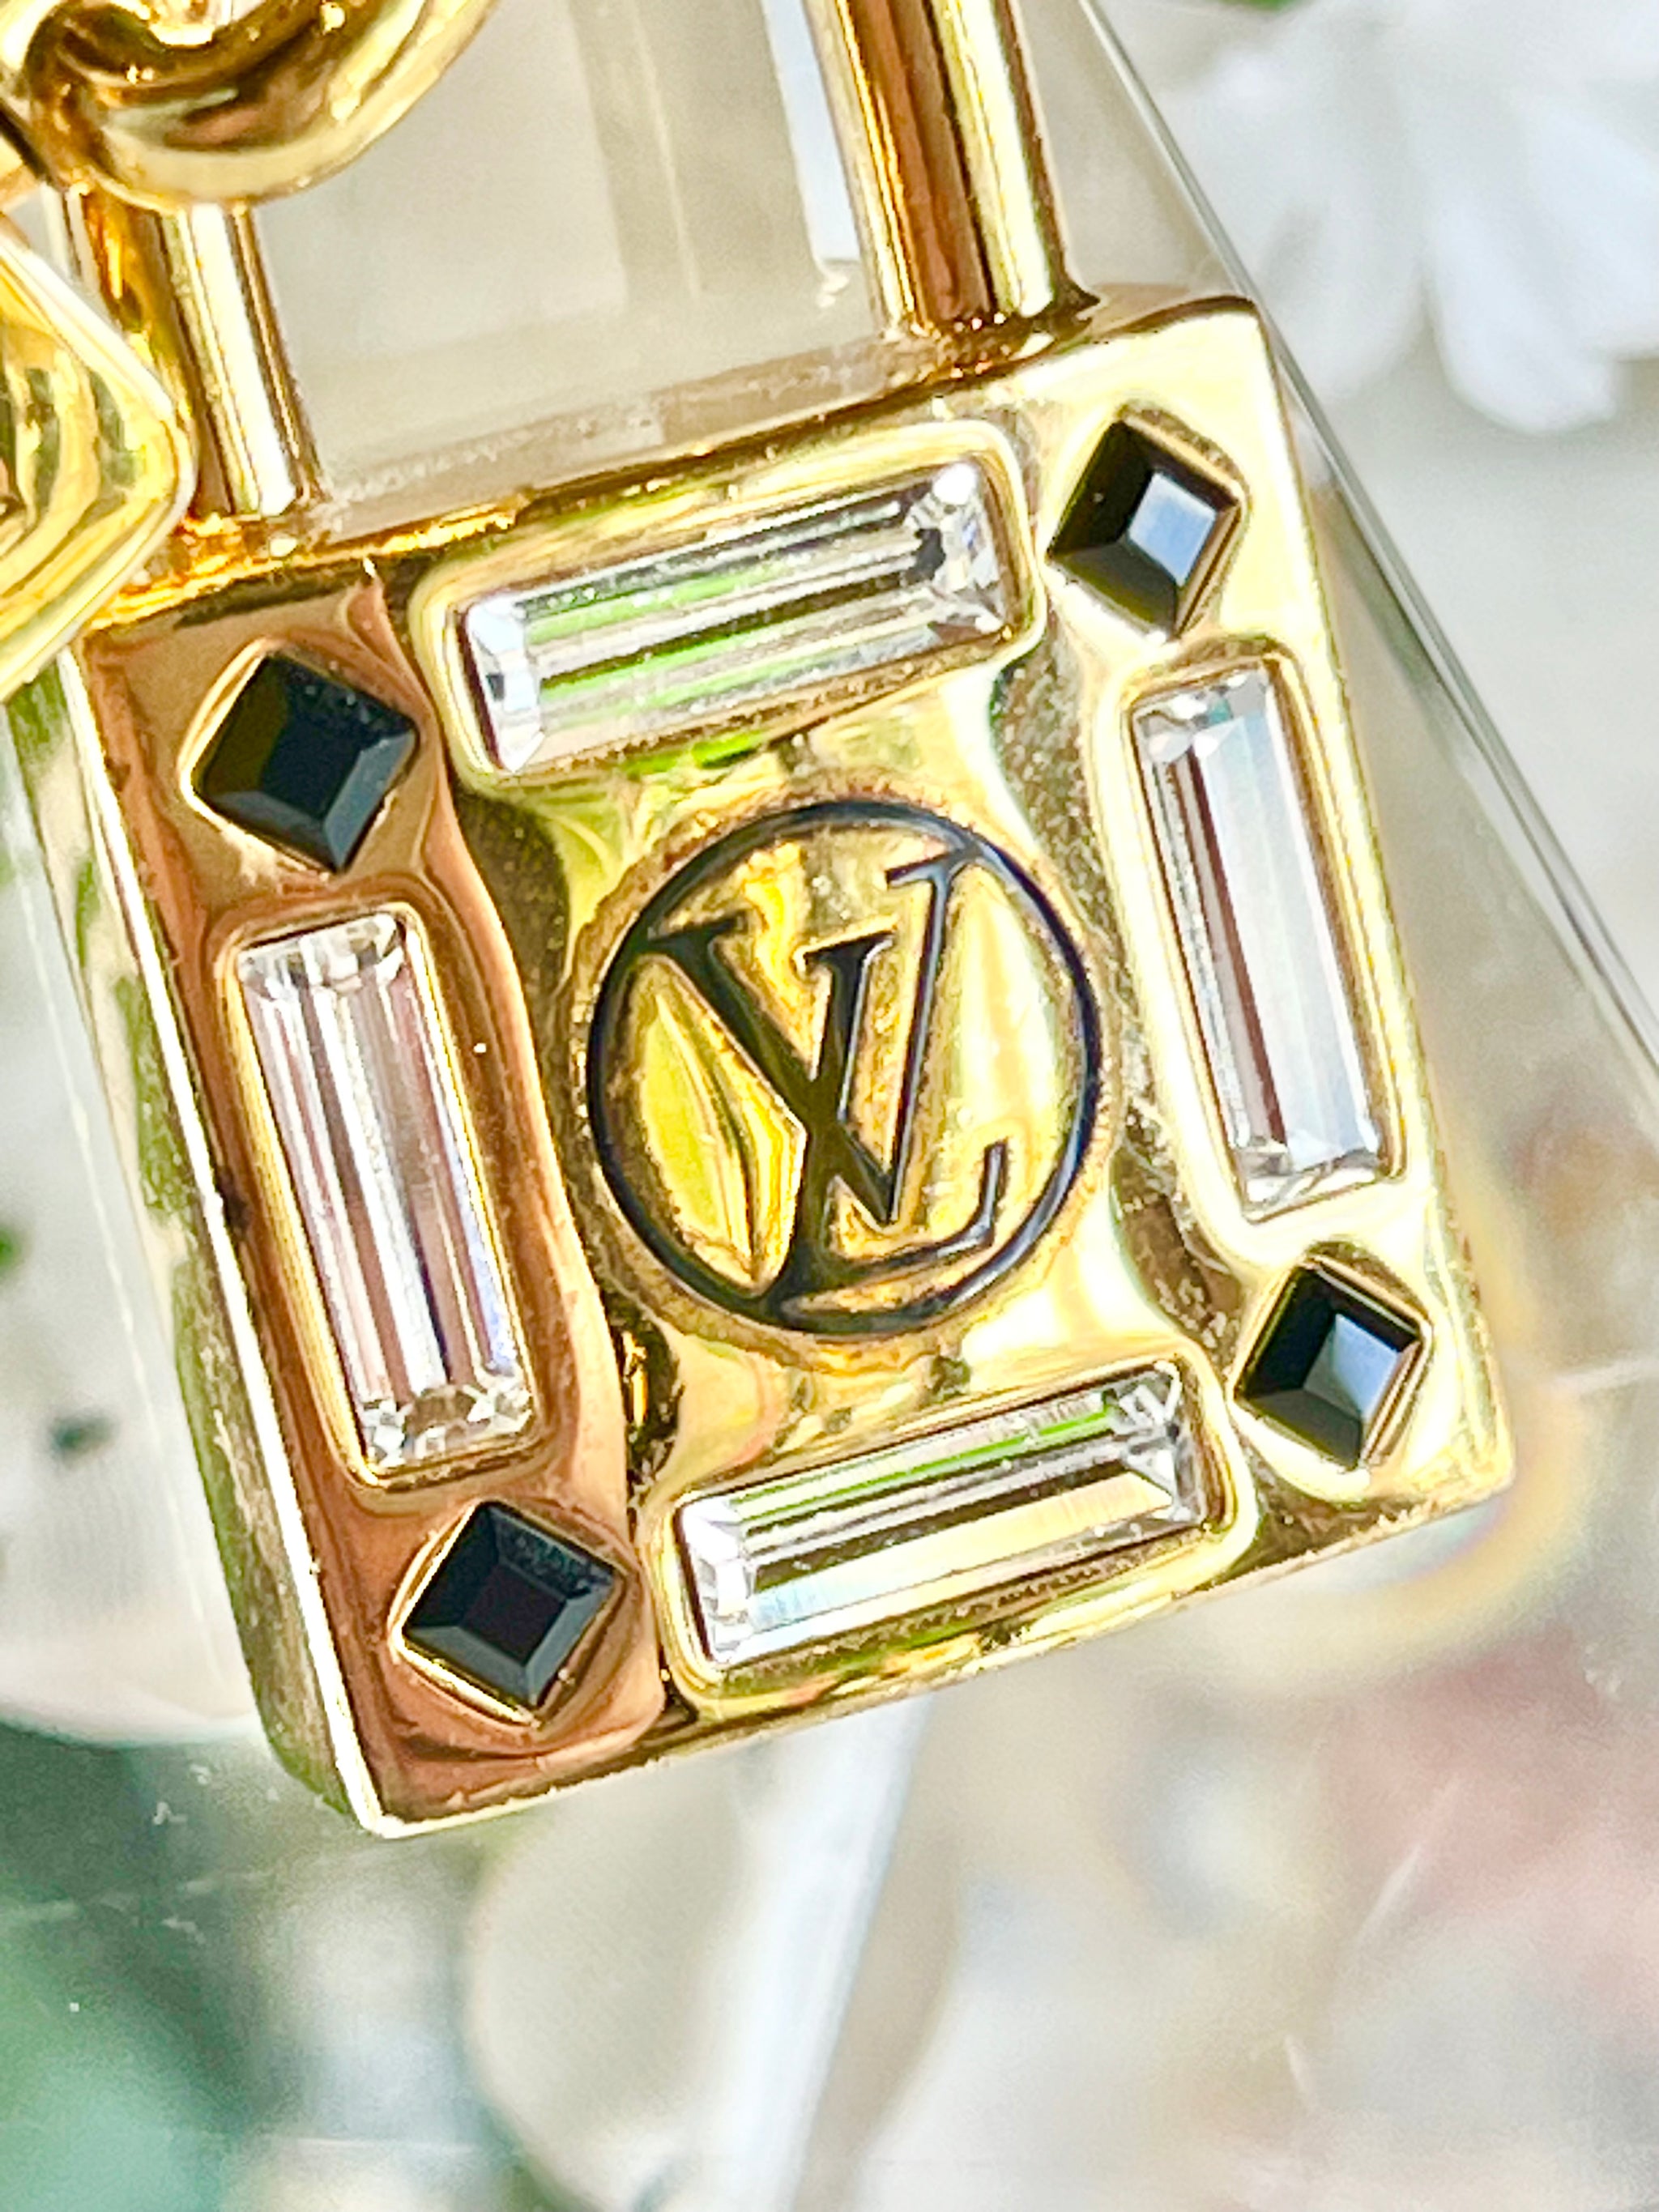 Louis Vuitton Gold-Tone Lock Me Strass Bag Charm Key Holder